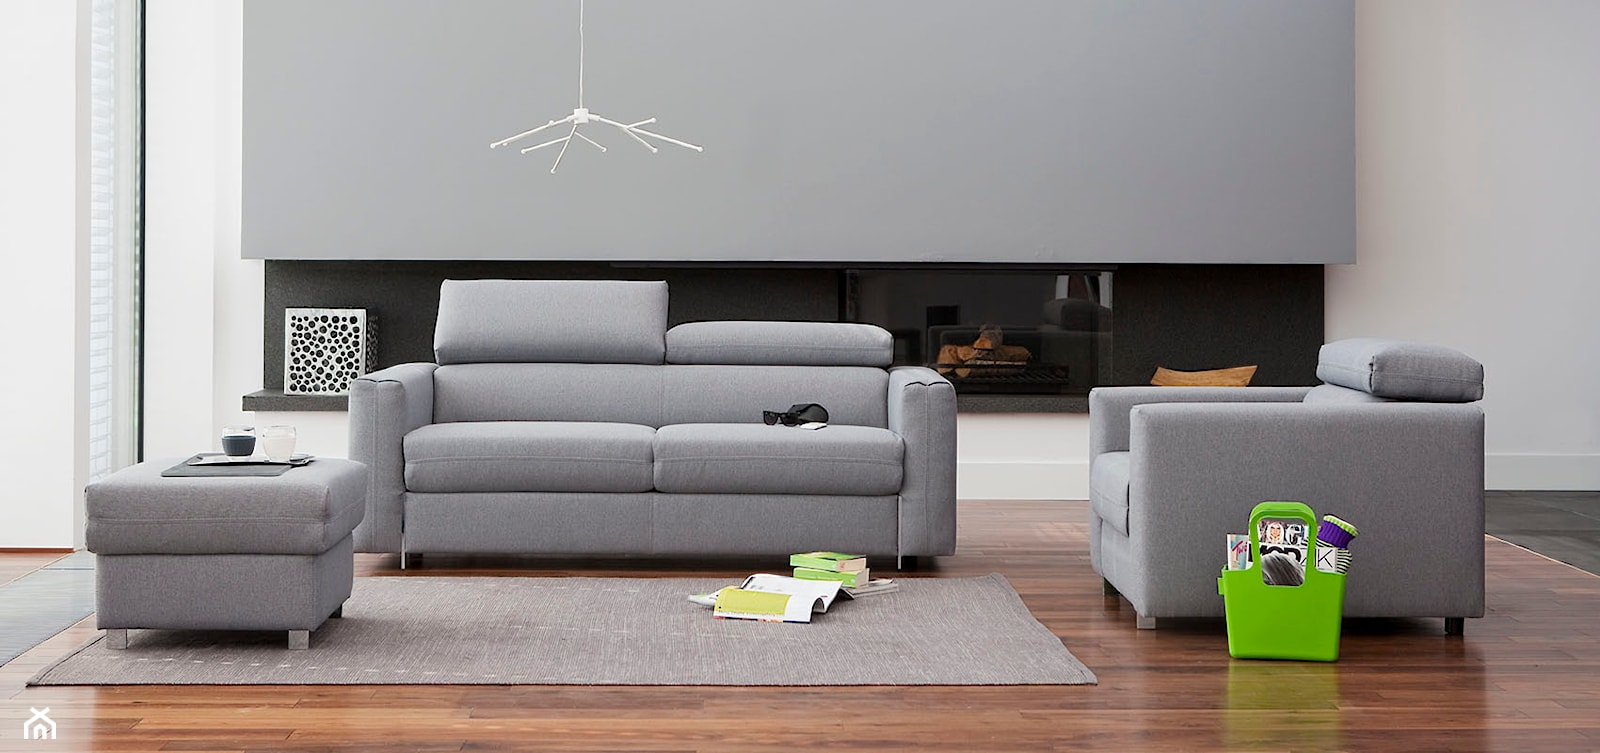 Palermo - sofa z funkcją spania - zdjęcie od Bizzarto - Homebook